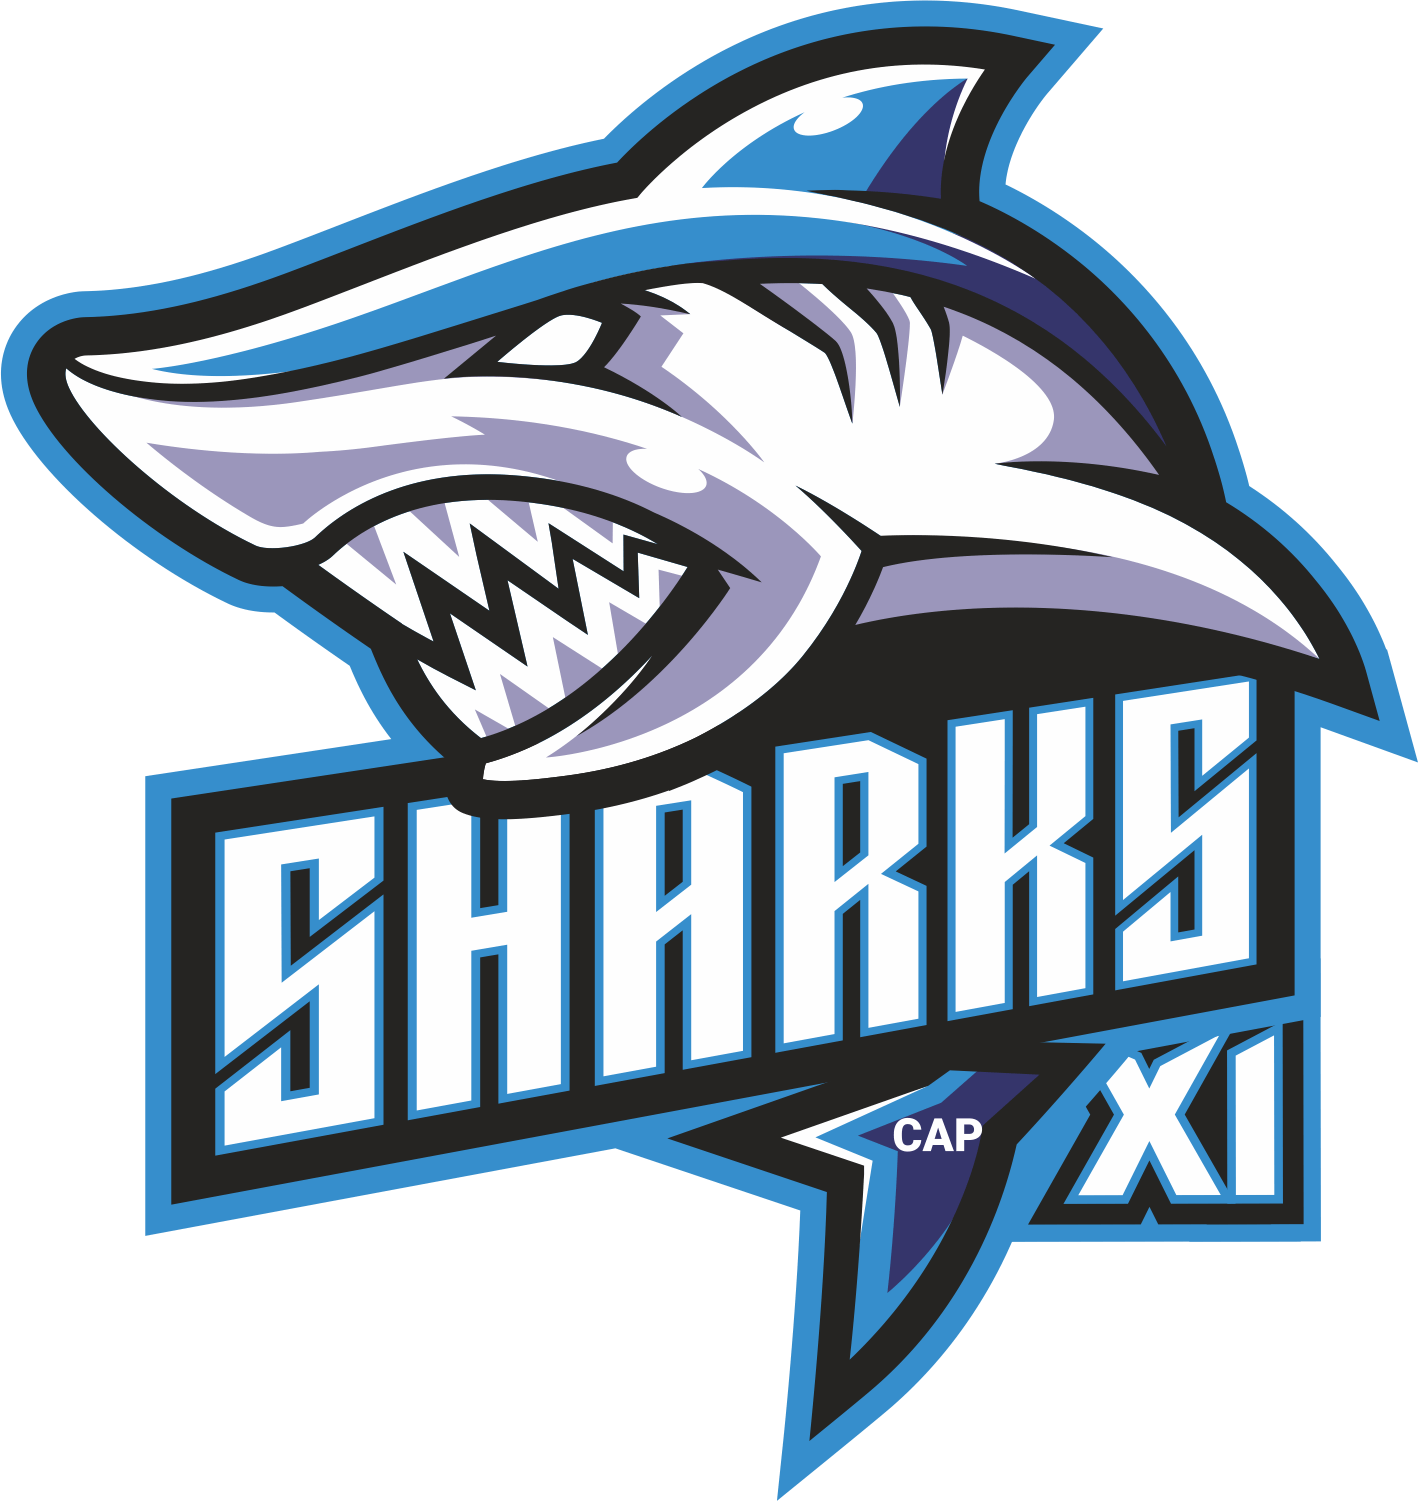 Sharks XI